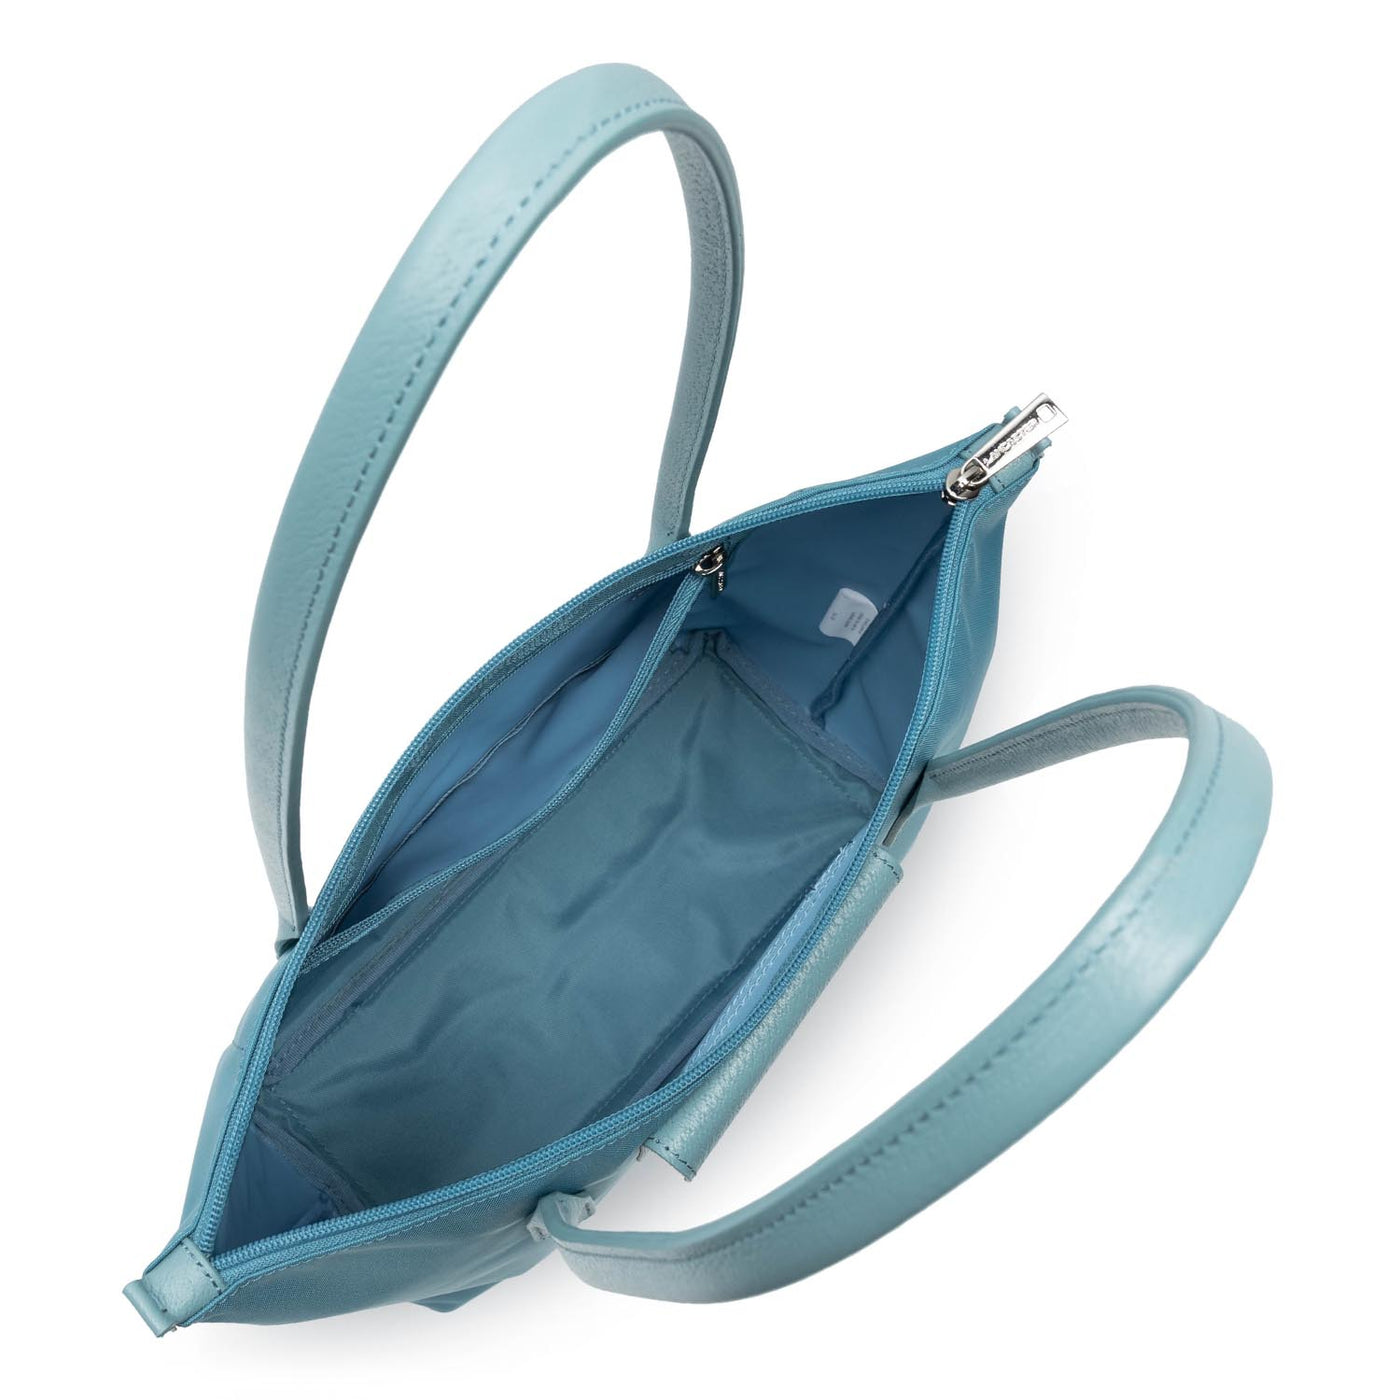 m tote bag - smart kba #couleur_bleu-cendre